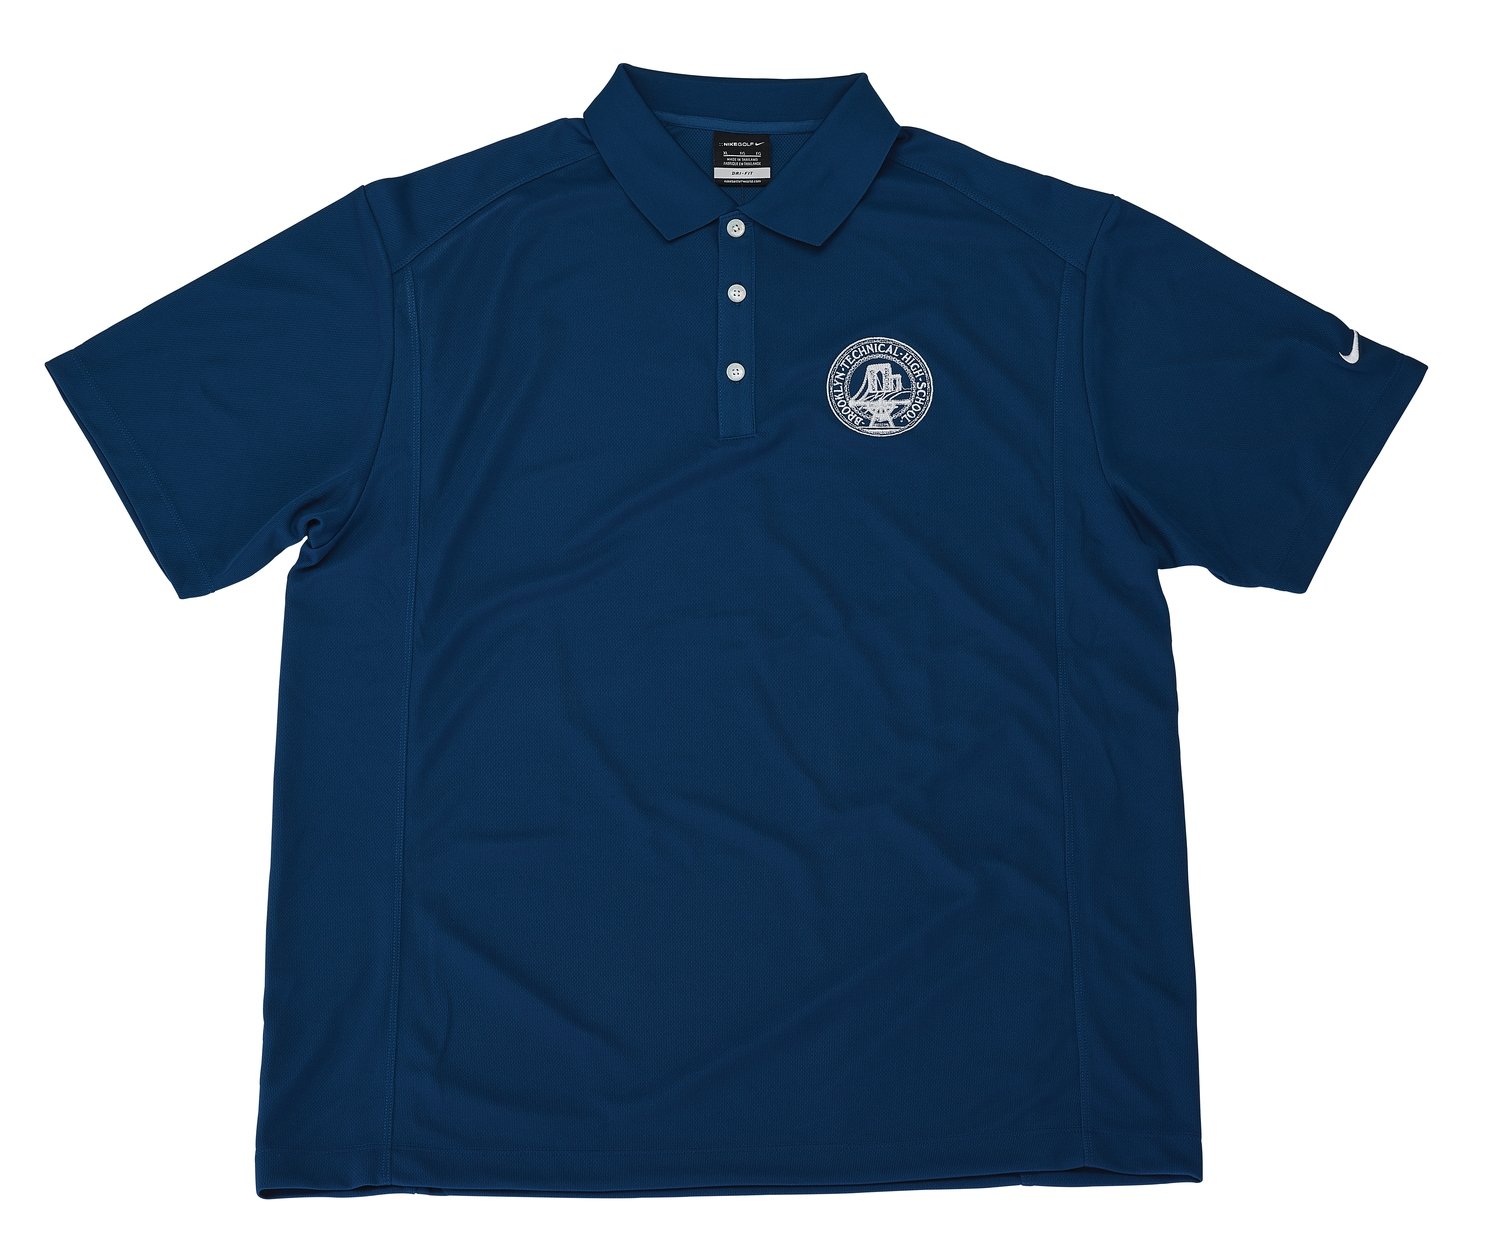 Golf Shirt - Nike brand - French Blue